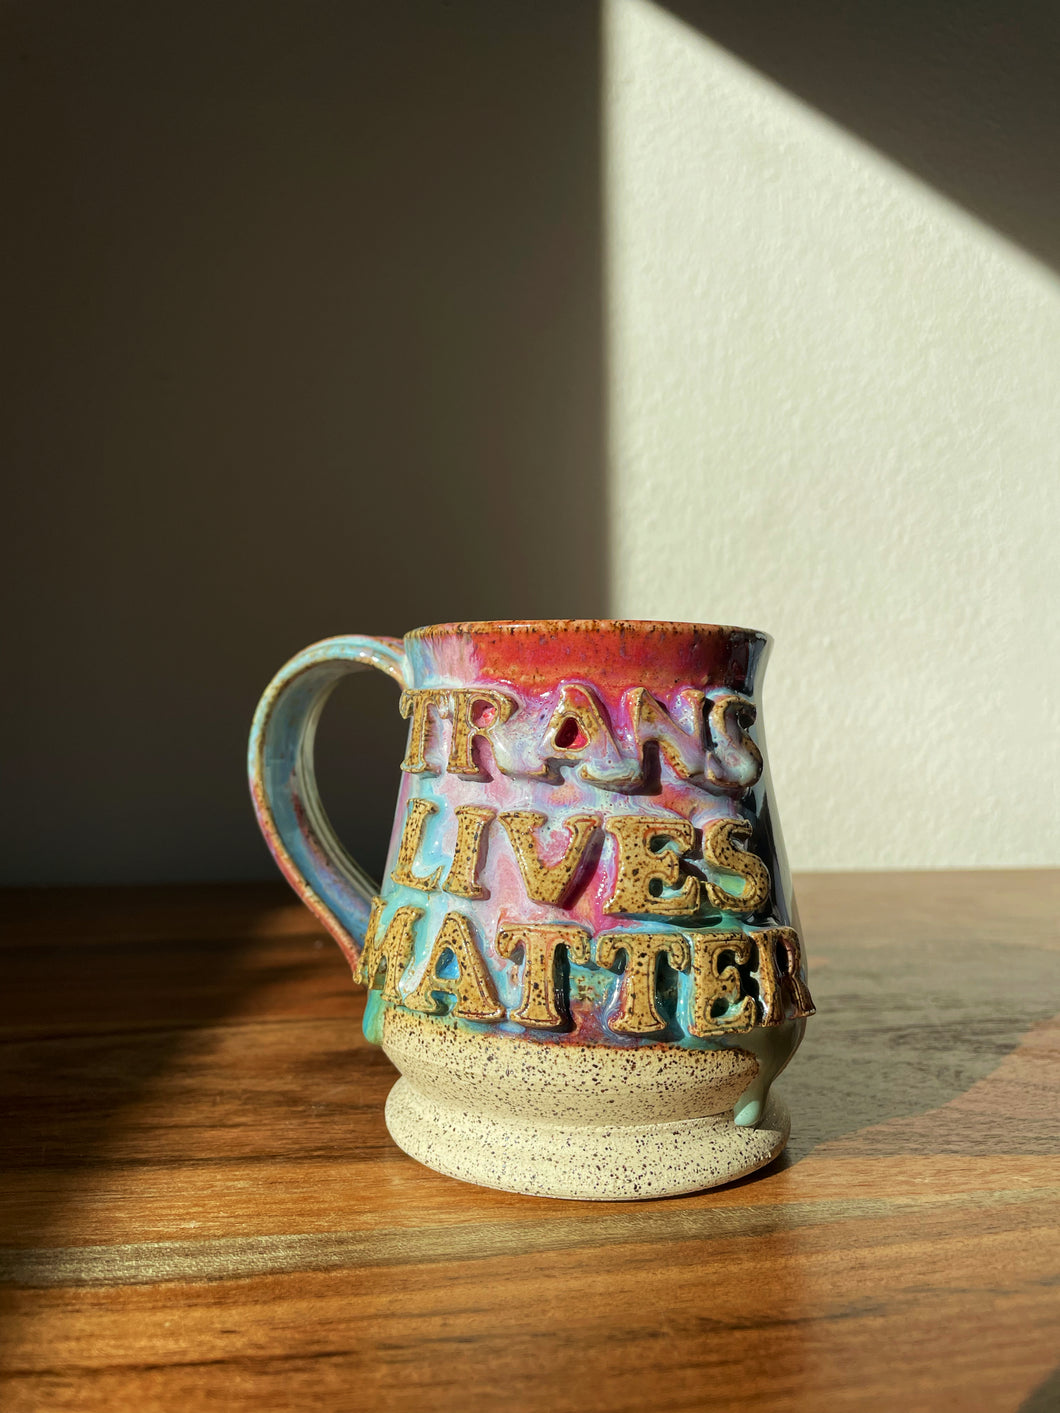 Trans Lives Matter Mug